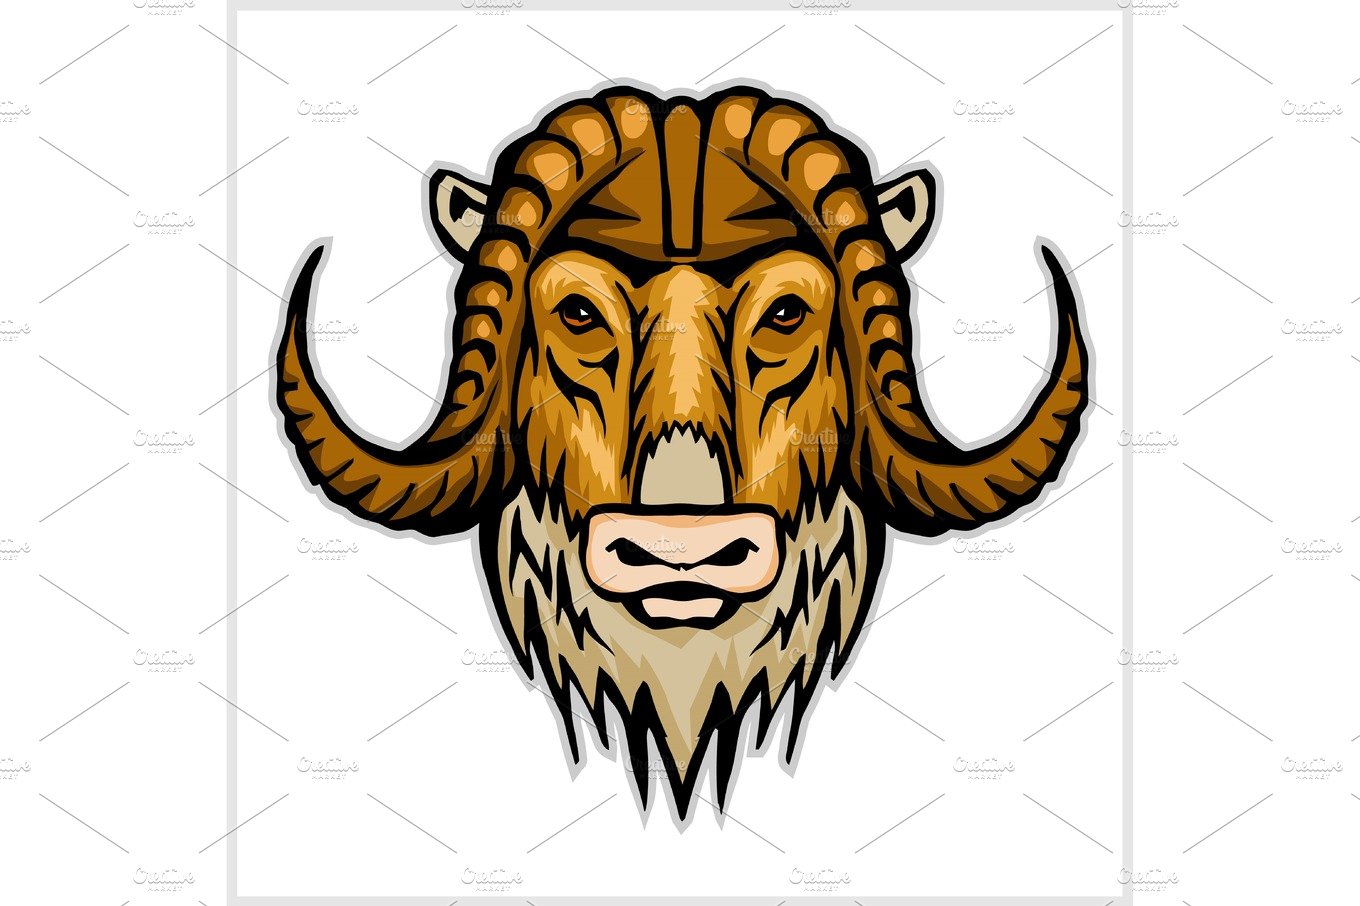 Buffalo head emblem isolated on white background. Design element for logo, ... cover image.